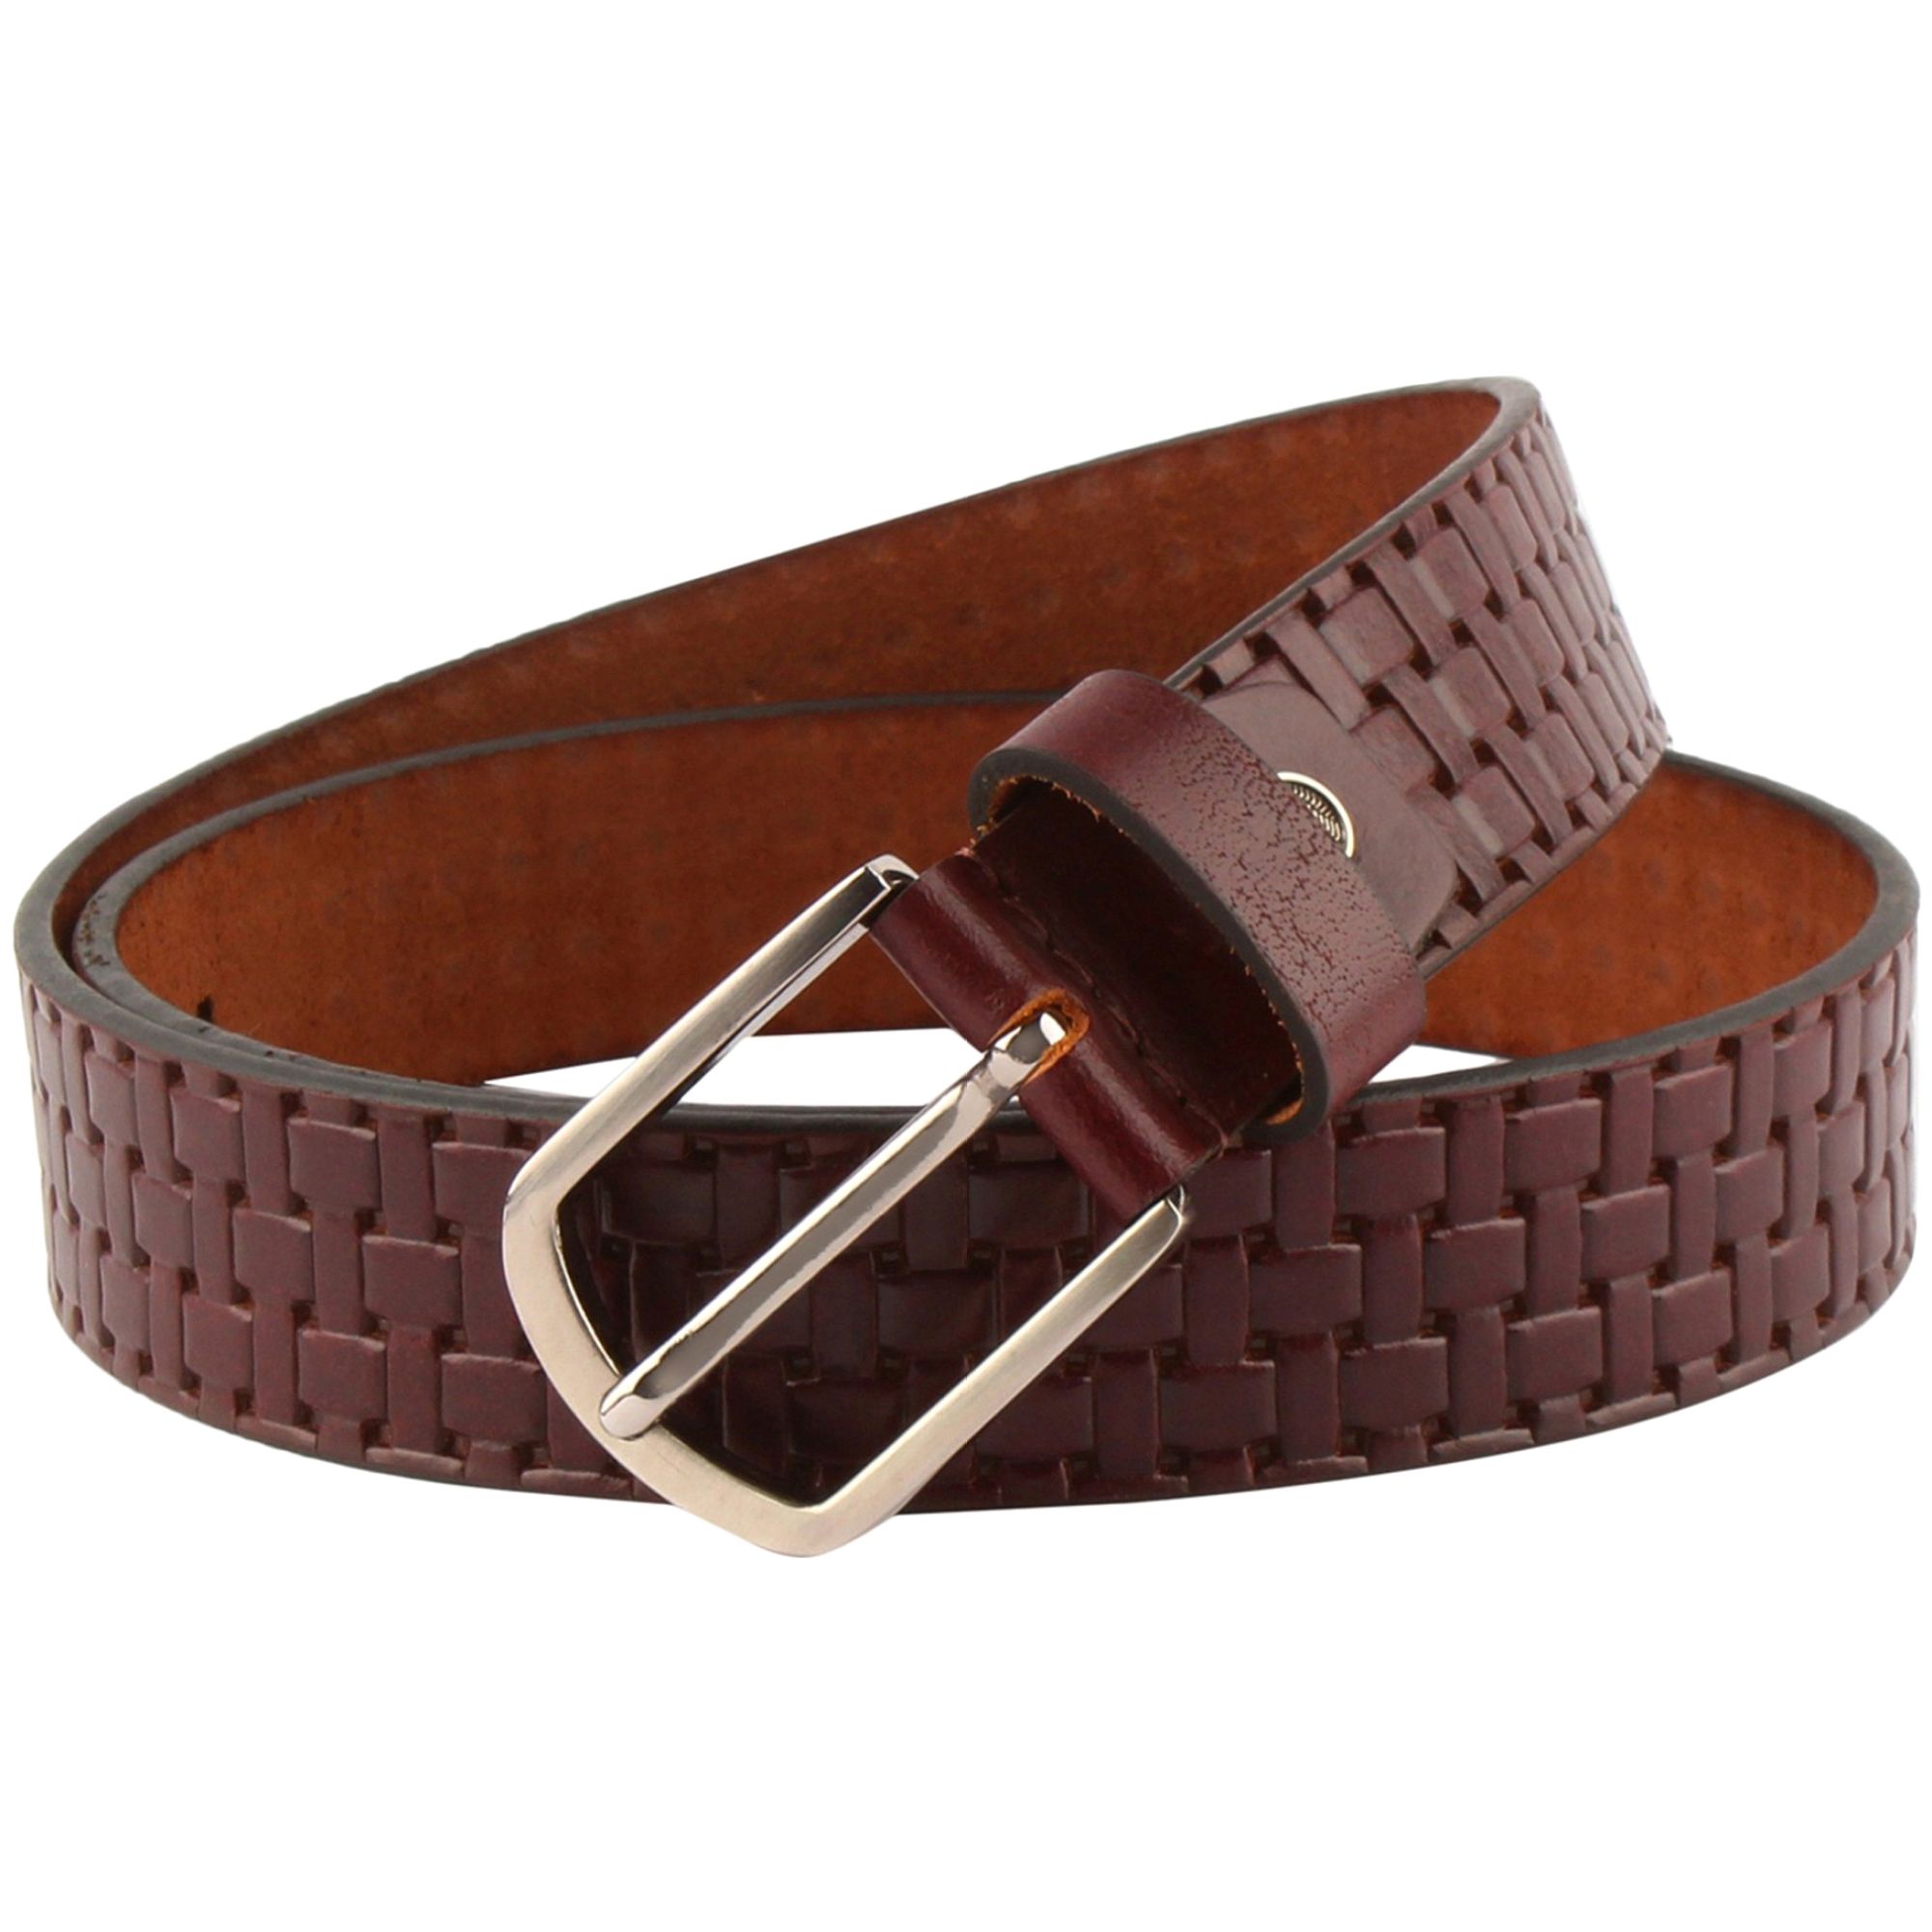 Debonair International Men's Casual Patterned Genuine Leather Belt, DI934268, Brown